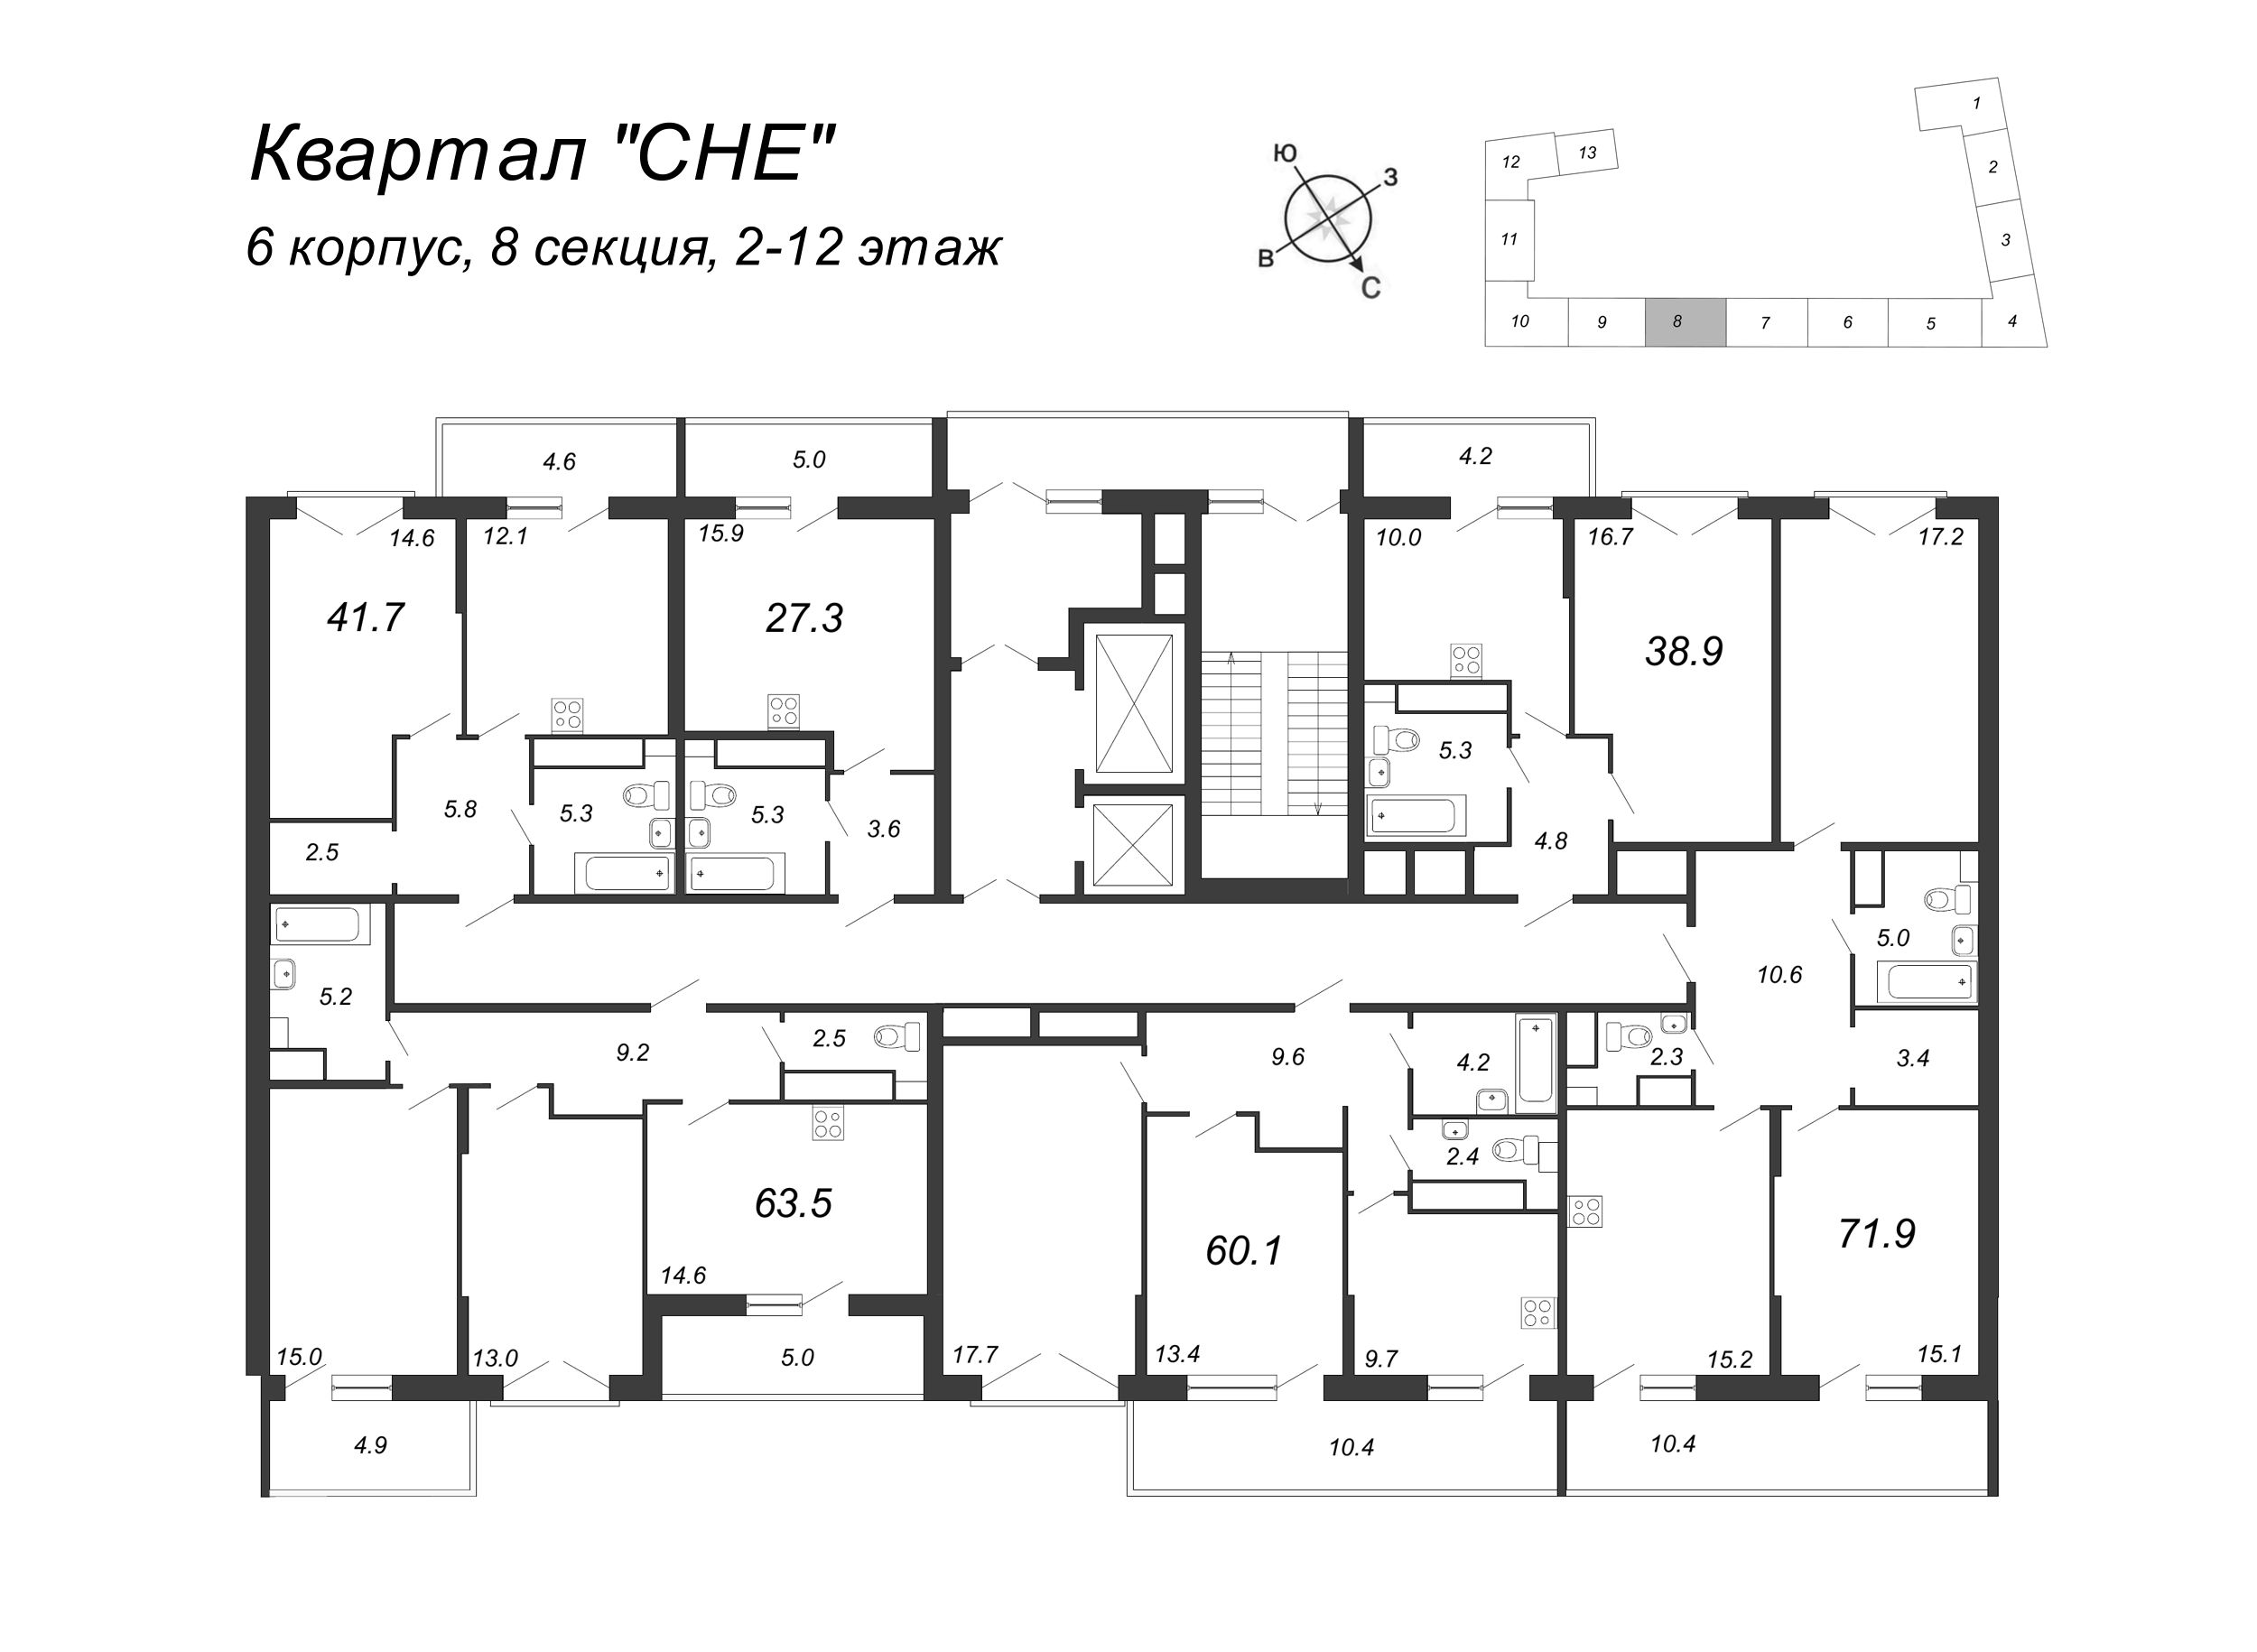 Квартира-студия, 27.3 м² в ЖК "Квартал Che" - планировка этажа